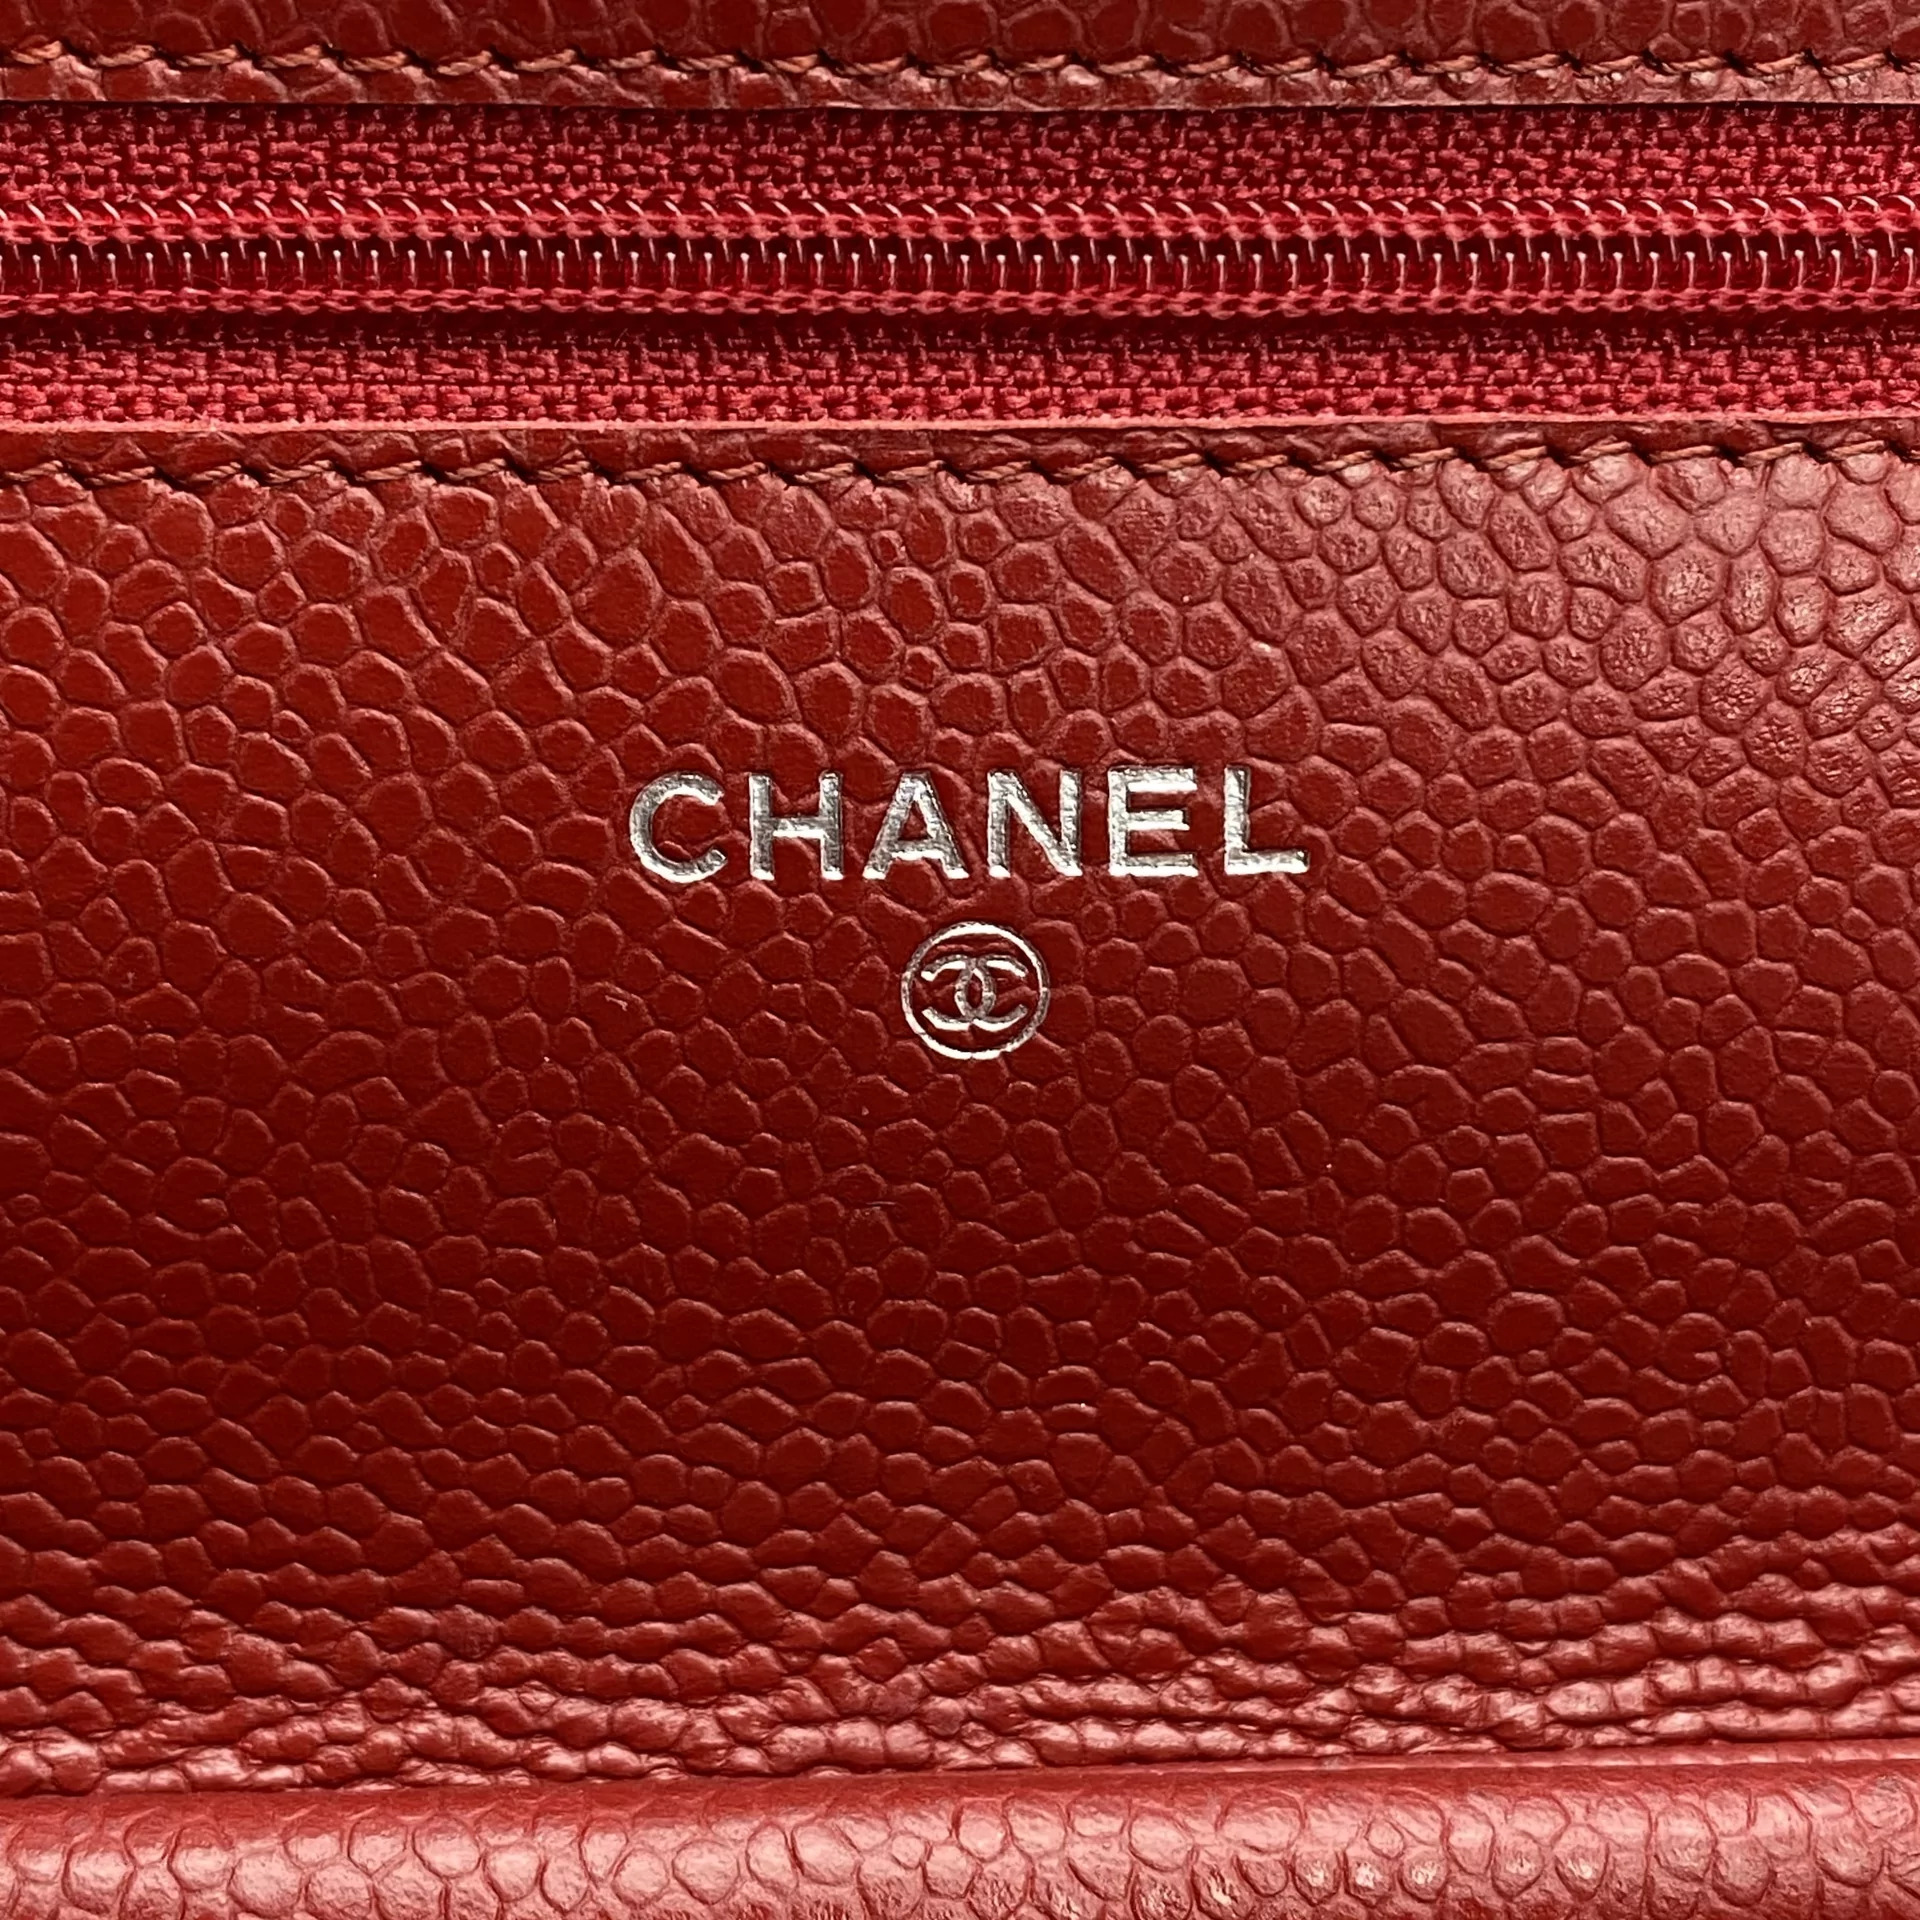 Bolsa Chanel Woc Vermelha